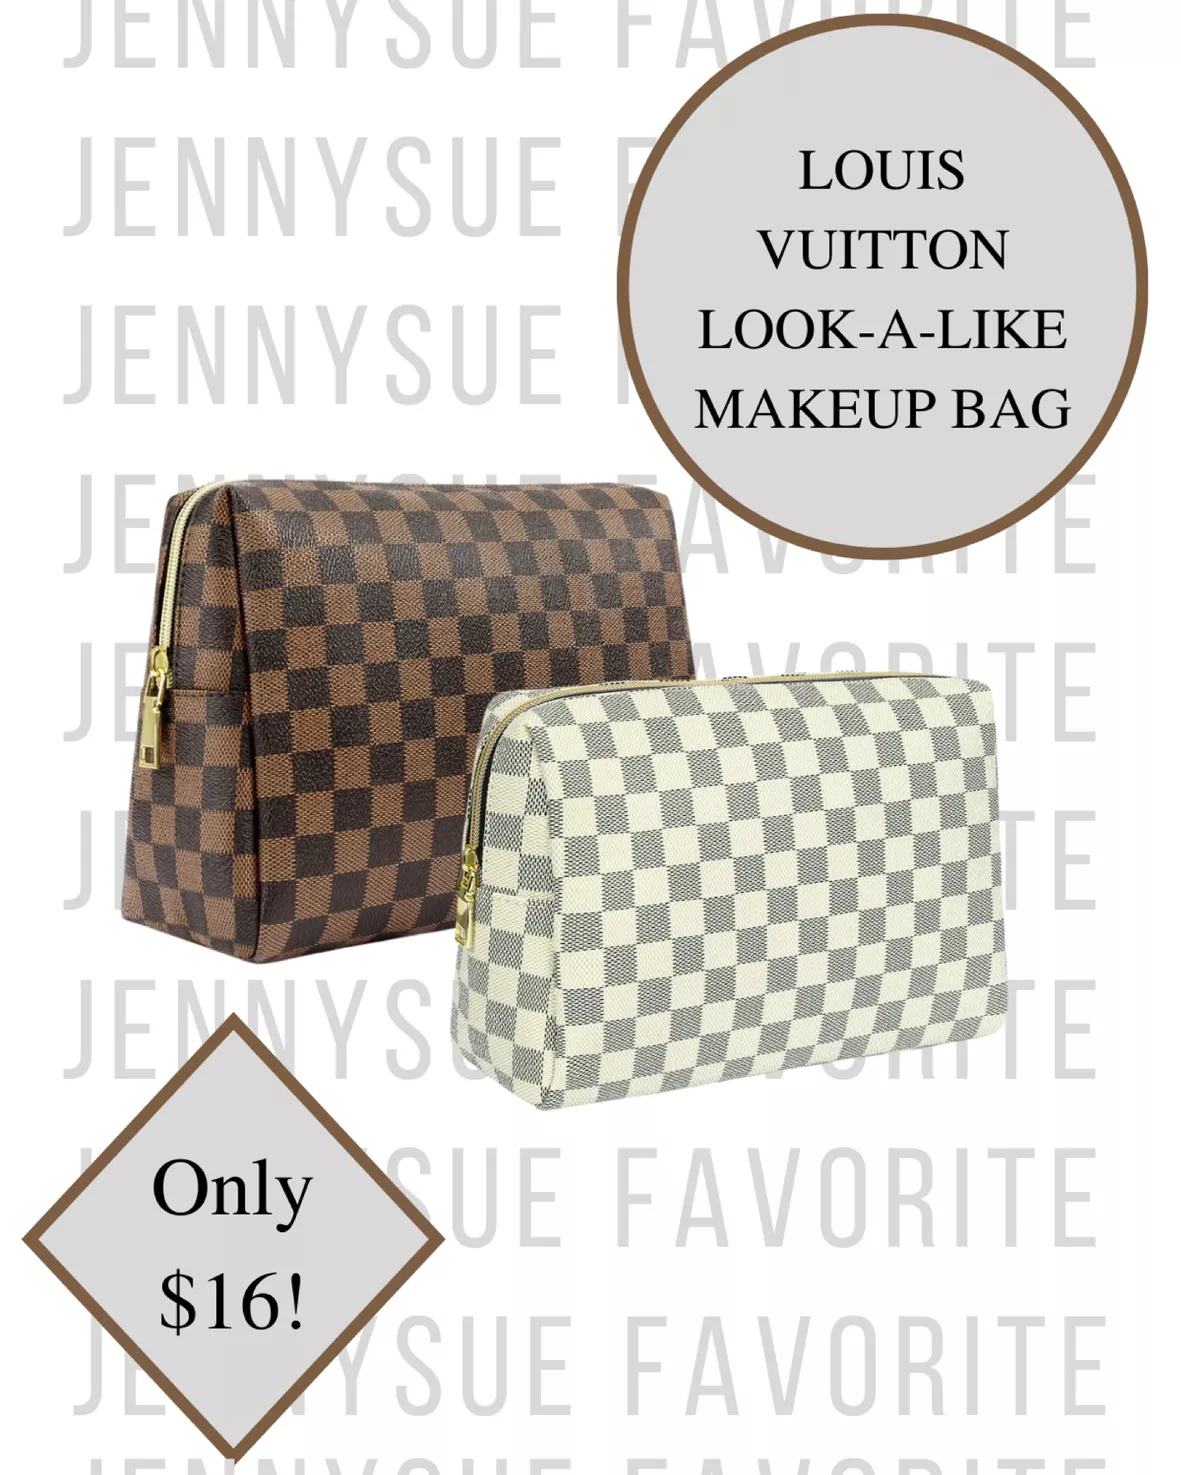 Aokur Makeup Bag Cosmetic Bag Travelling Checkered Make Up Bag